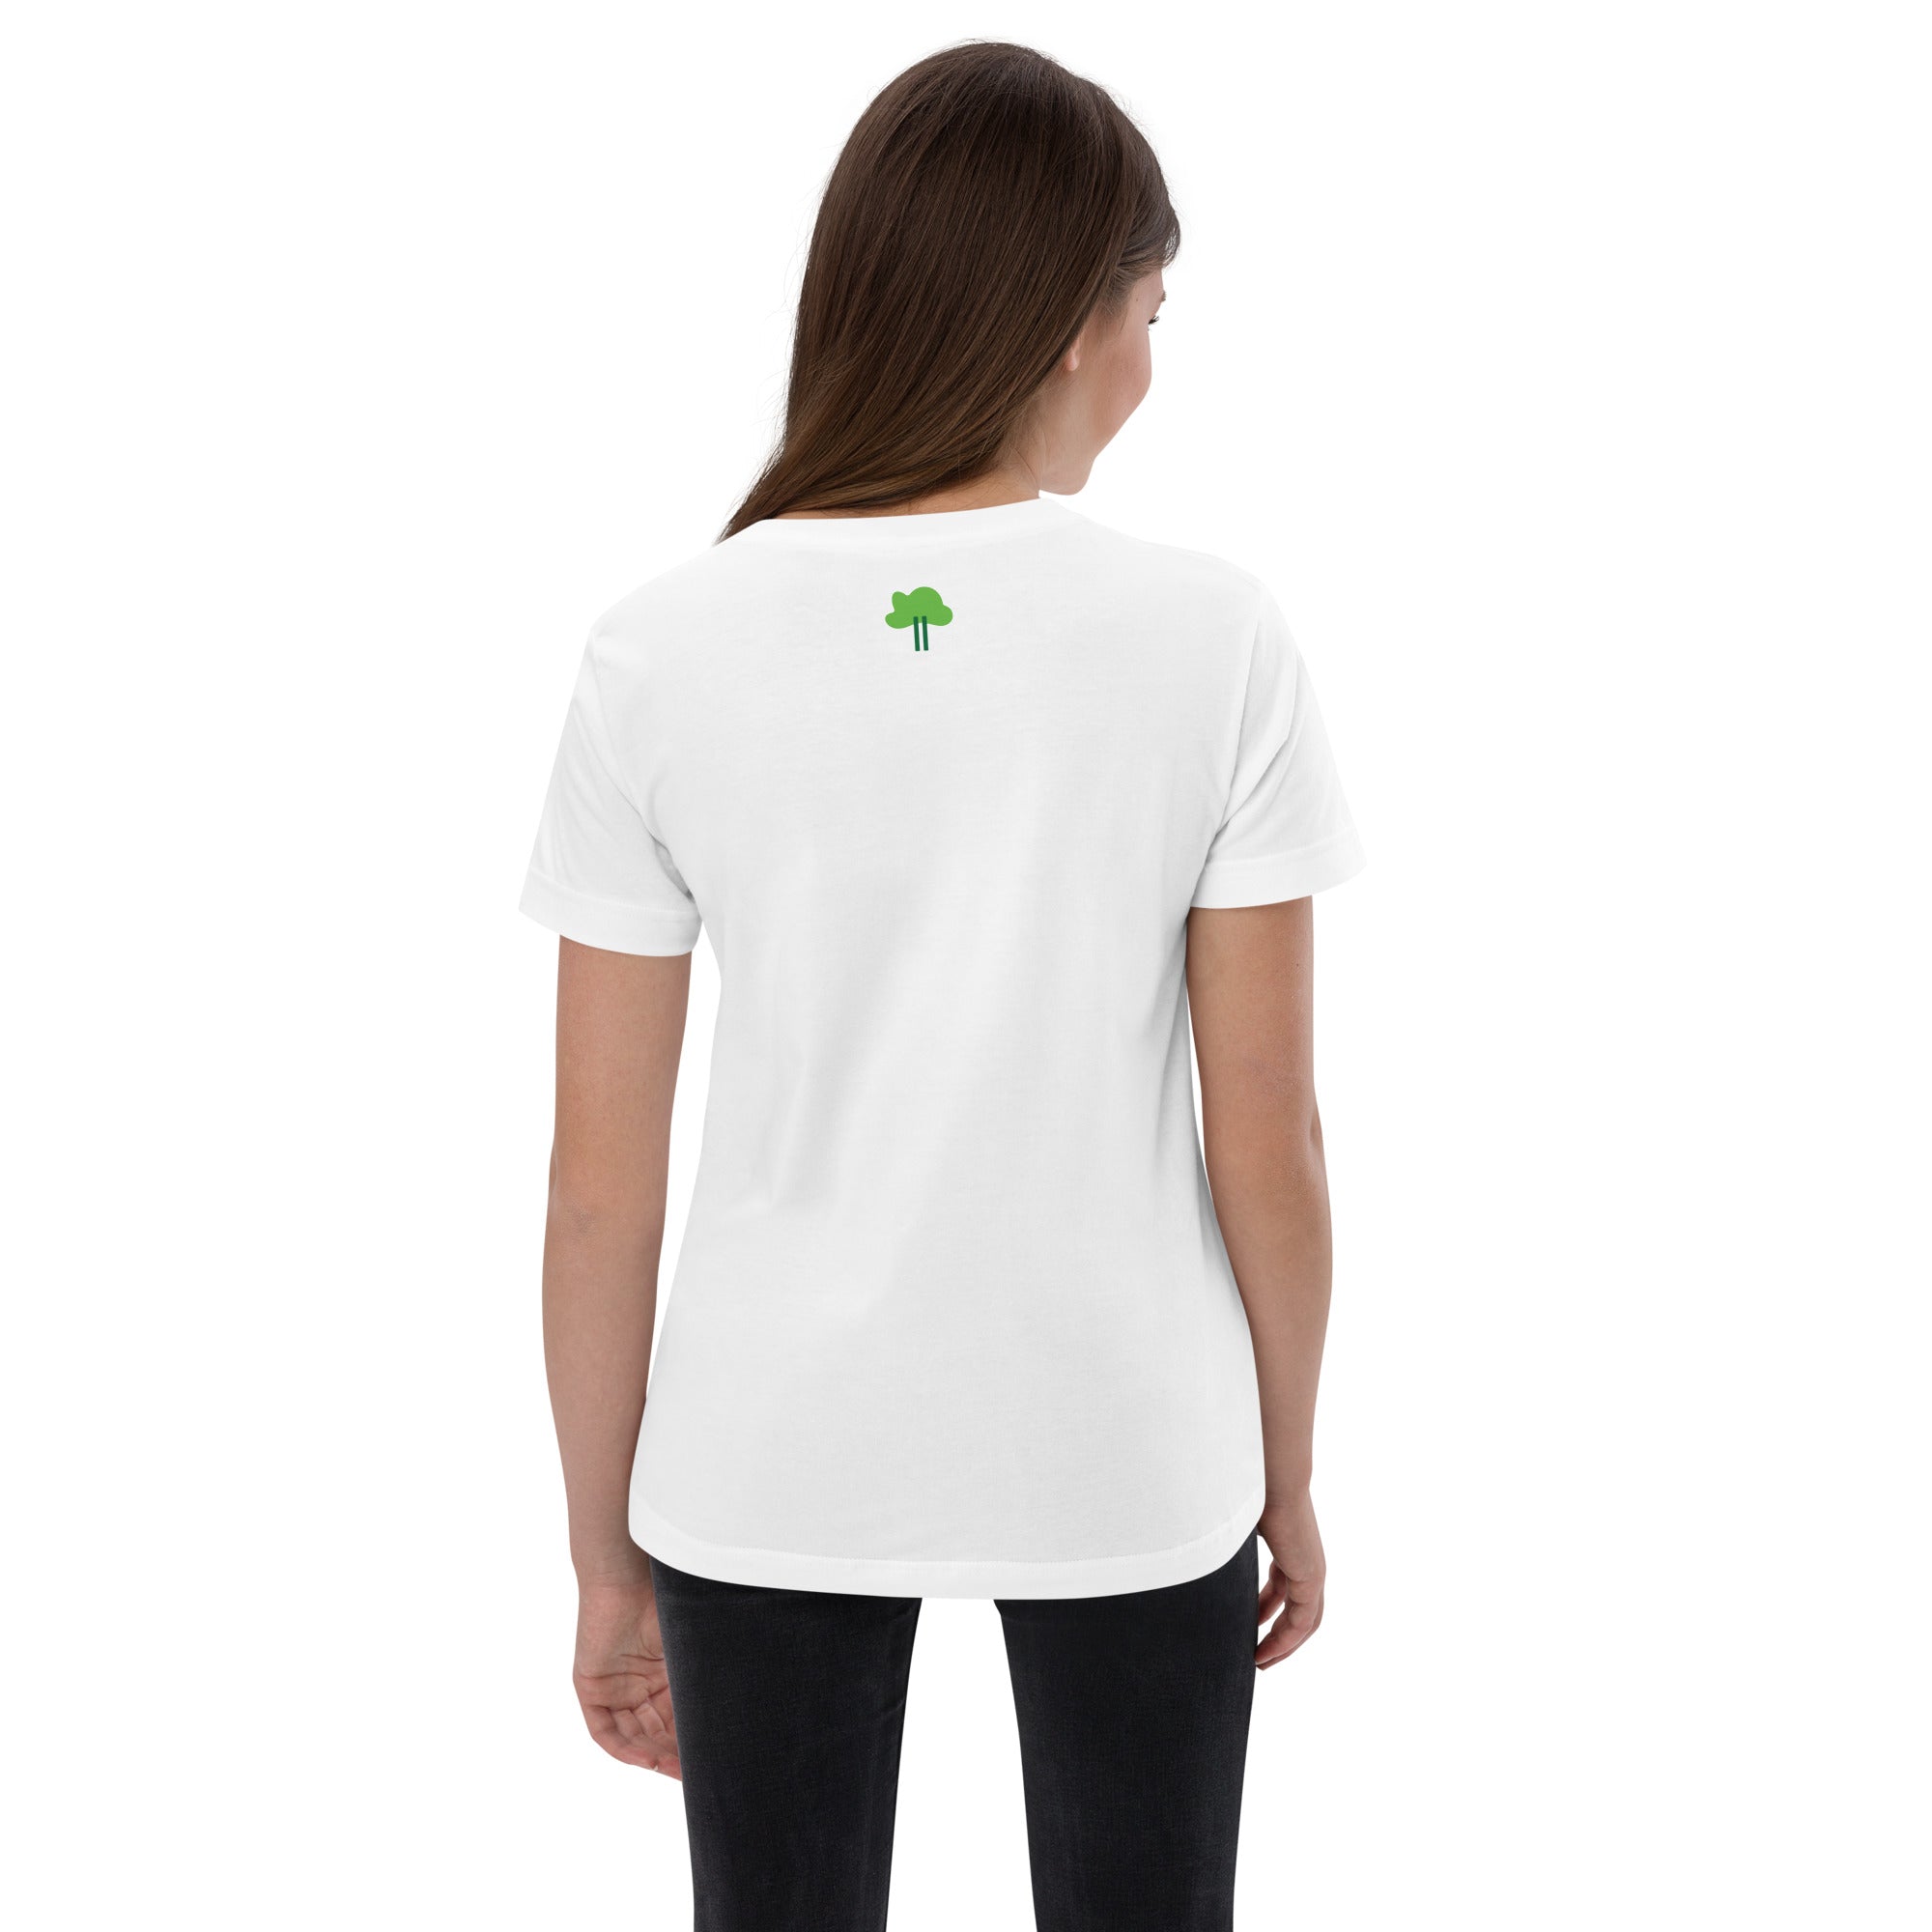 I Temp - F - FK | Youth jersey t-shirt